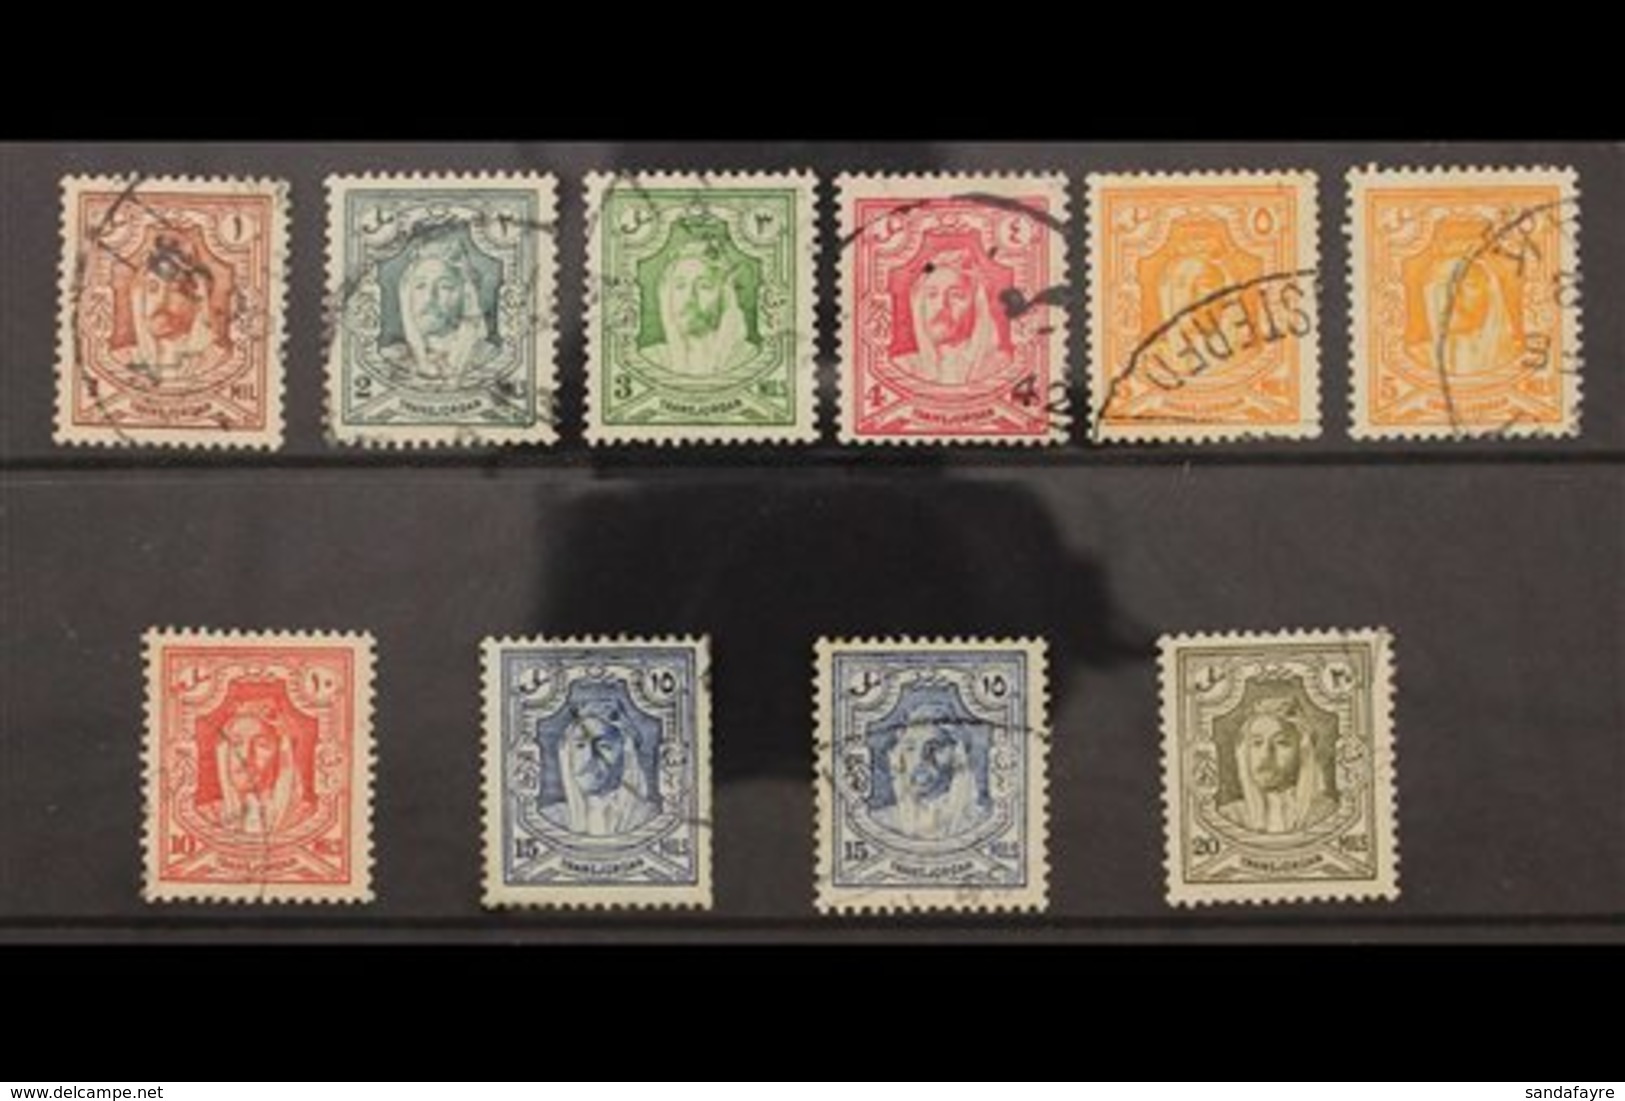 1930-39 PERF VARIANTS. Emir Complete Set Of Perforation Variants Inc All P13½ X13 & Coil P13½ X 14, SG 194c, 195a, 196ab - Jordanien